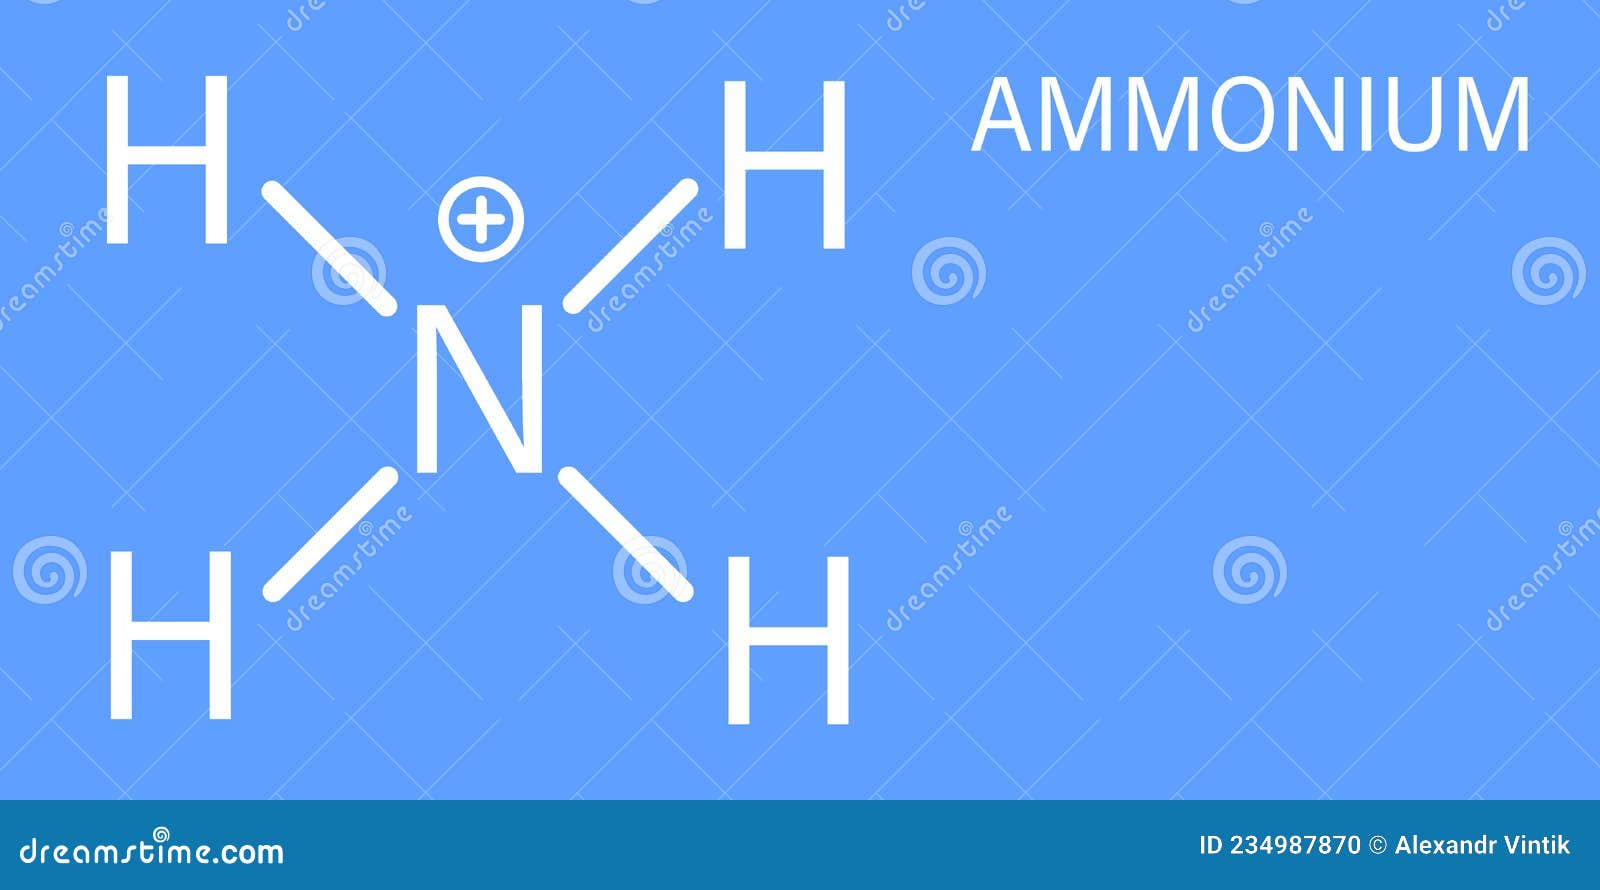 Ammonium Cation Skeletal Formula. Protonated Form of Ammonia Stock ...